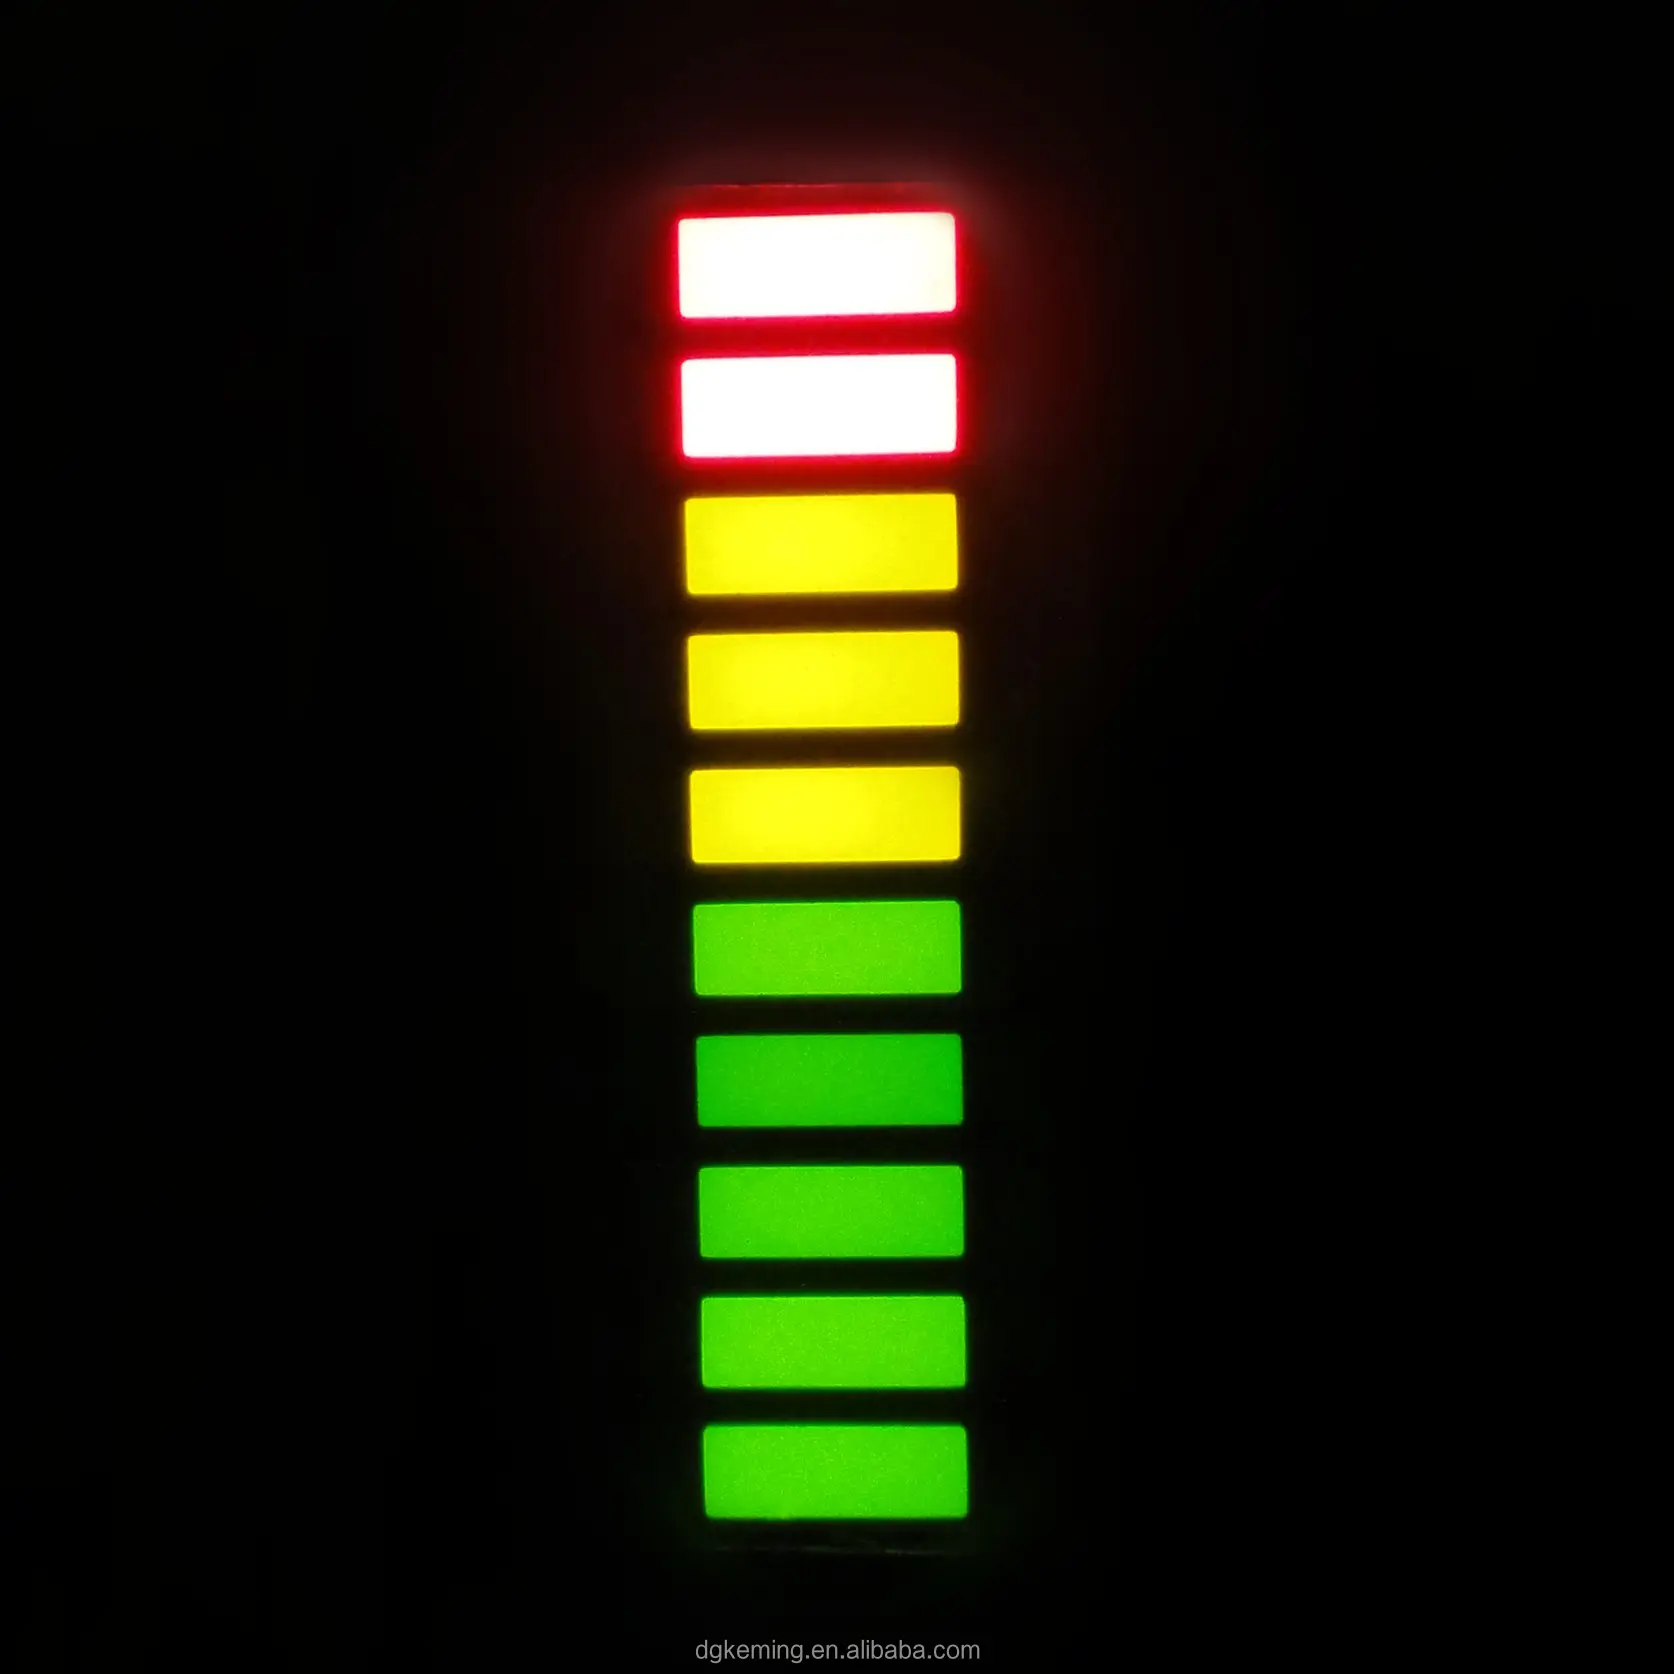 3 colors RGY led 10 bar led 10 segments led array display